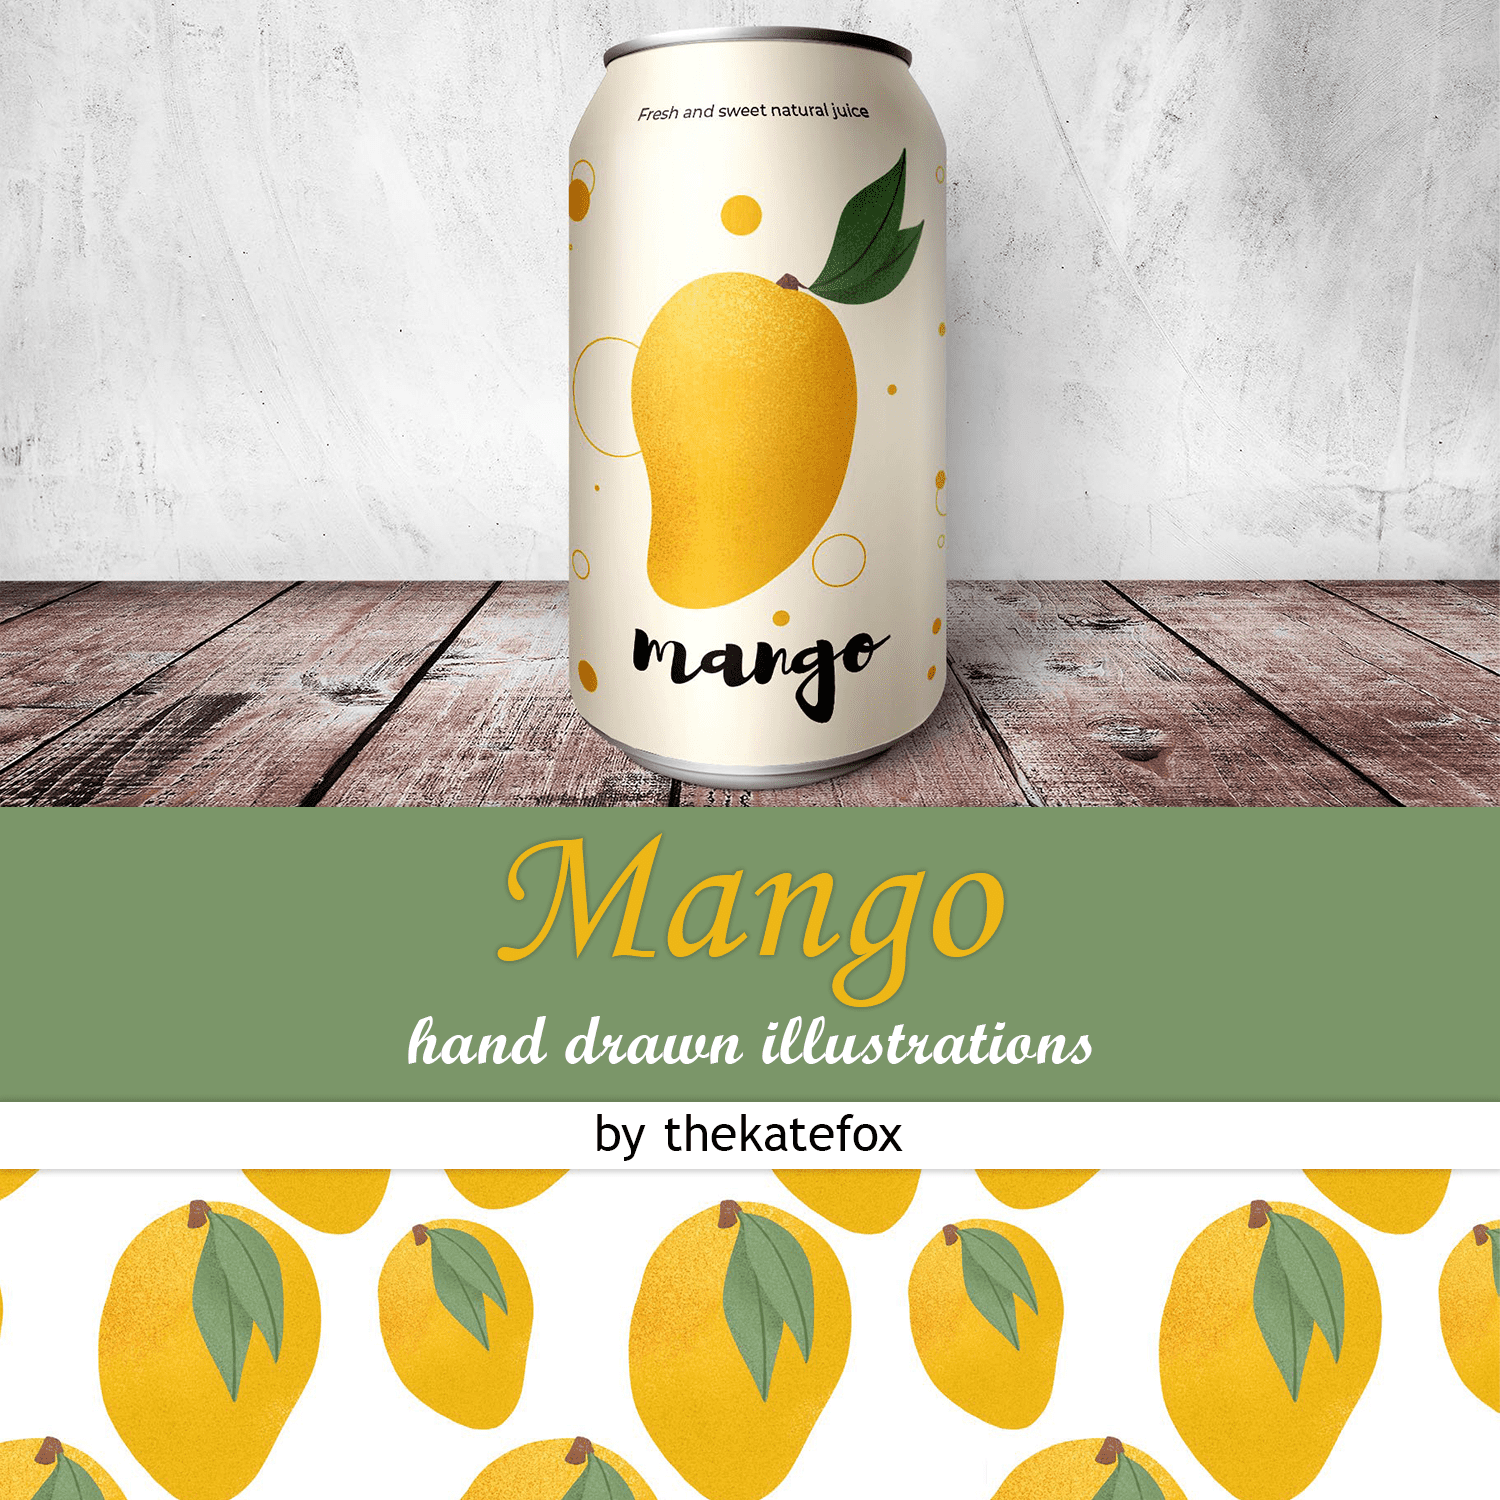 Mango hand drawn illustrations created by thekatefox.